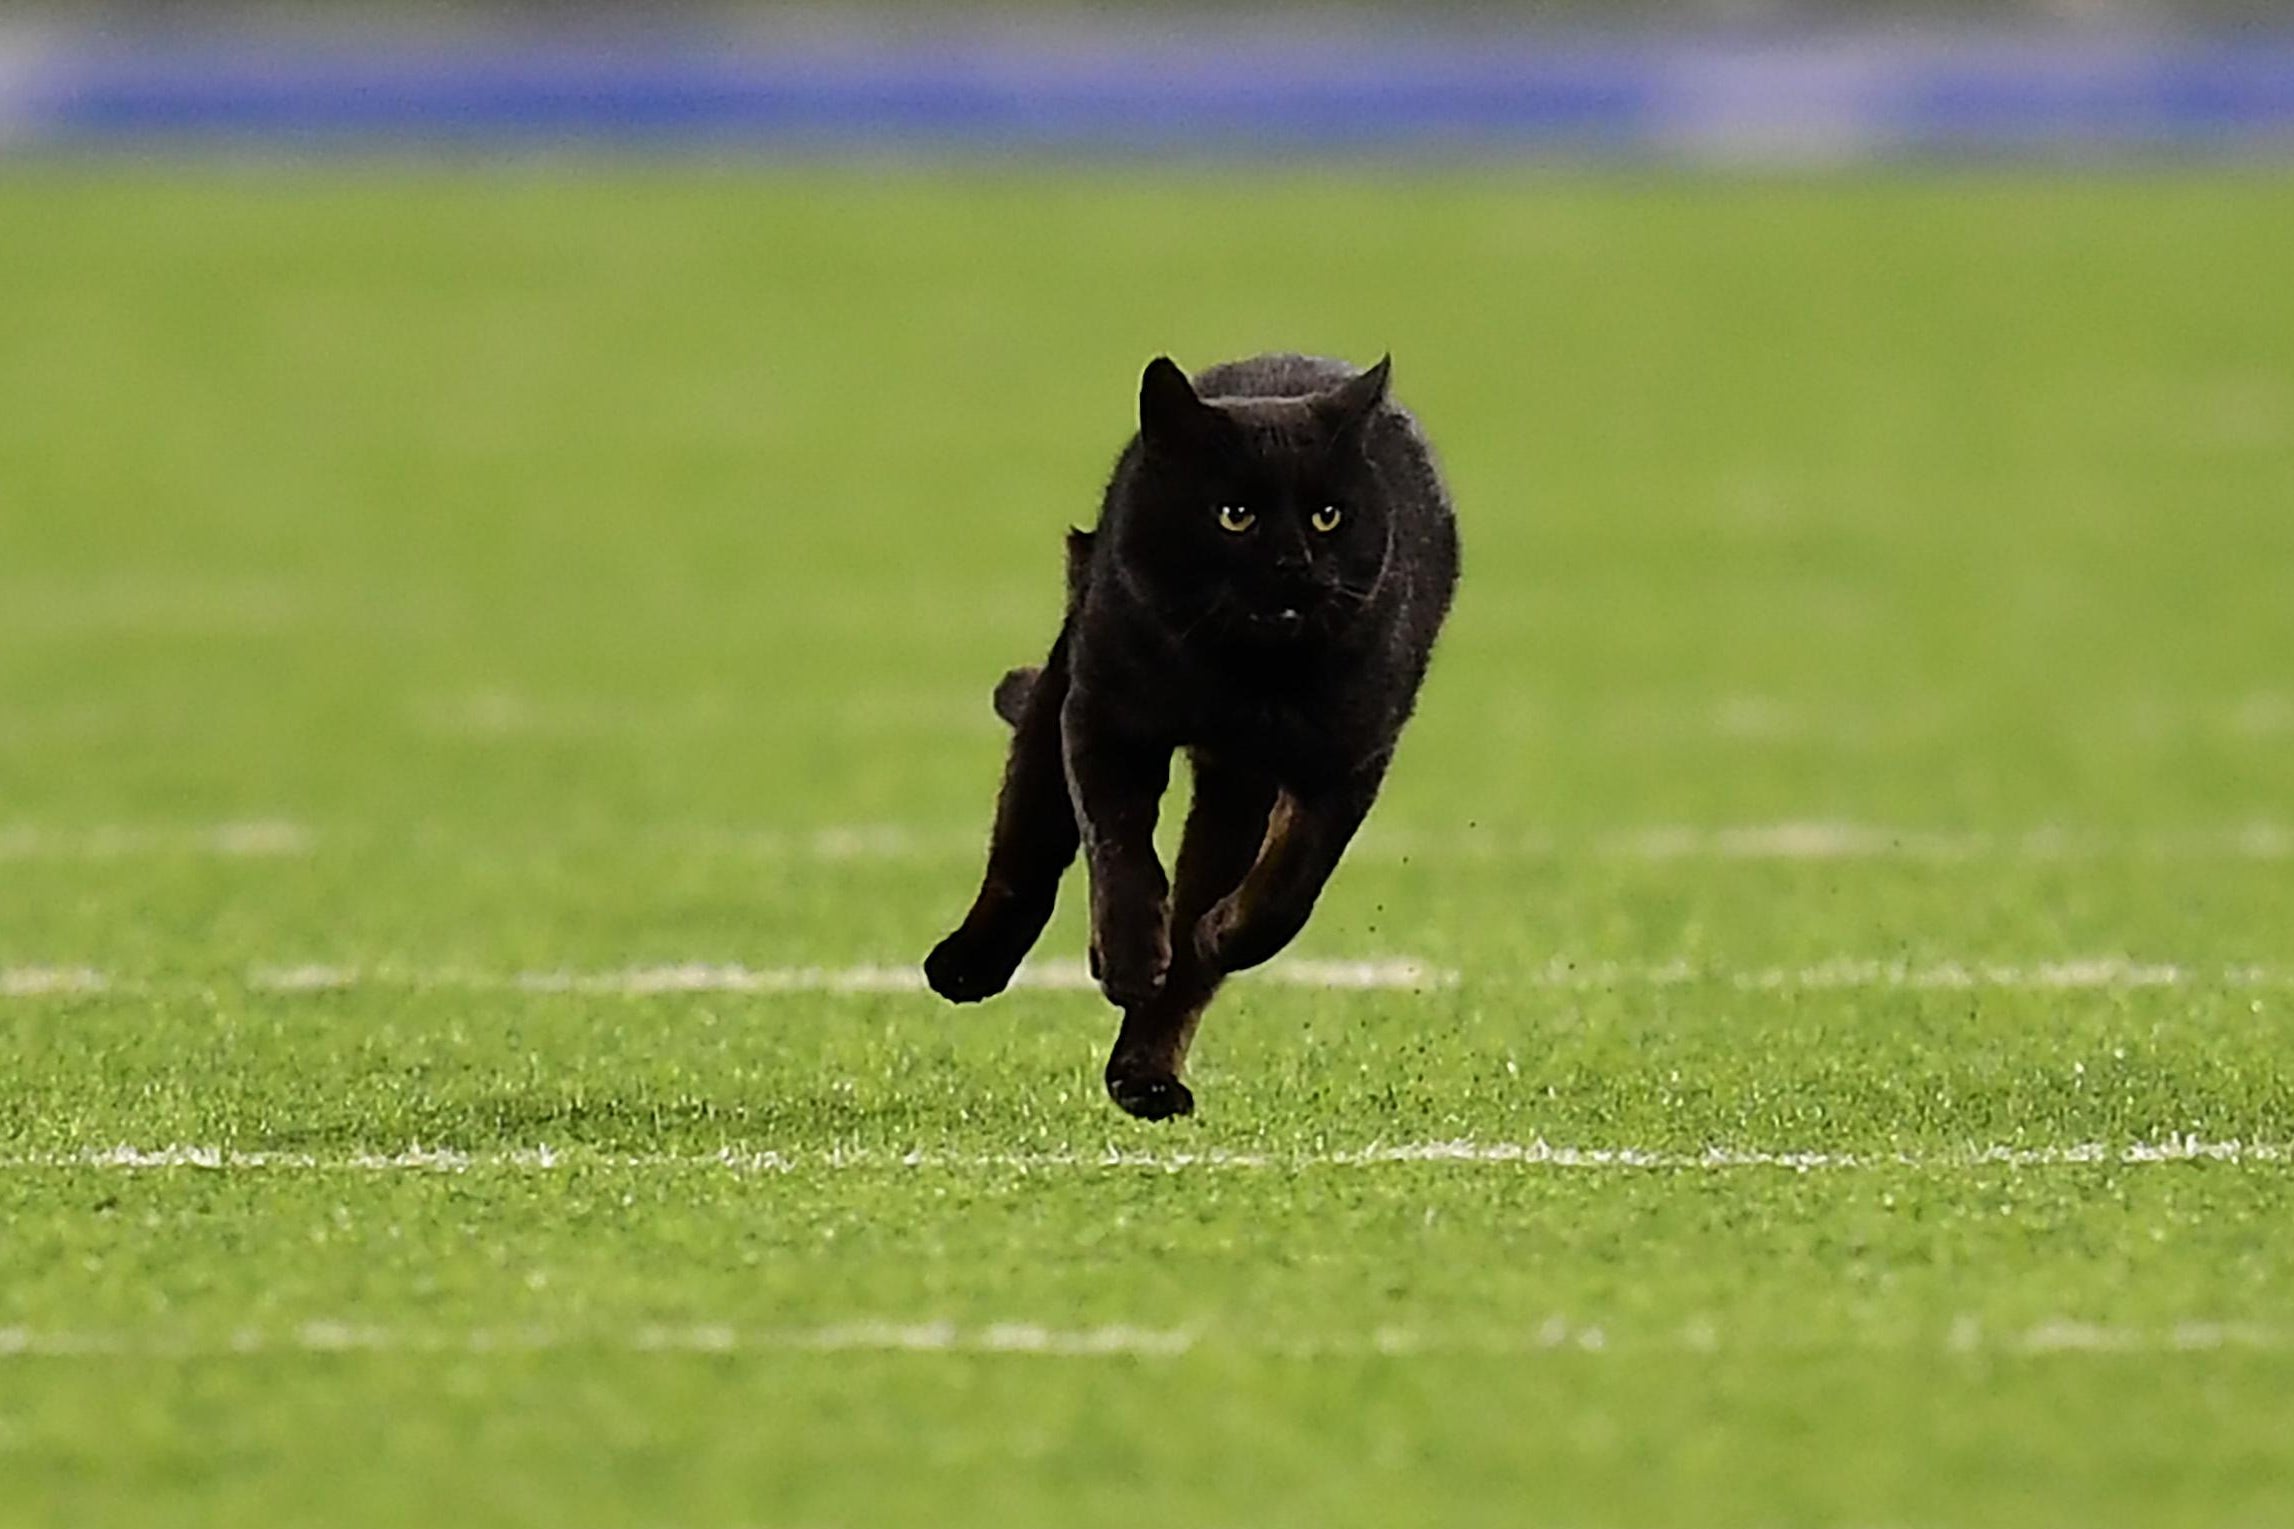 BLACK CAT ON THE FIELD